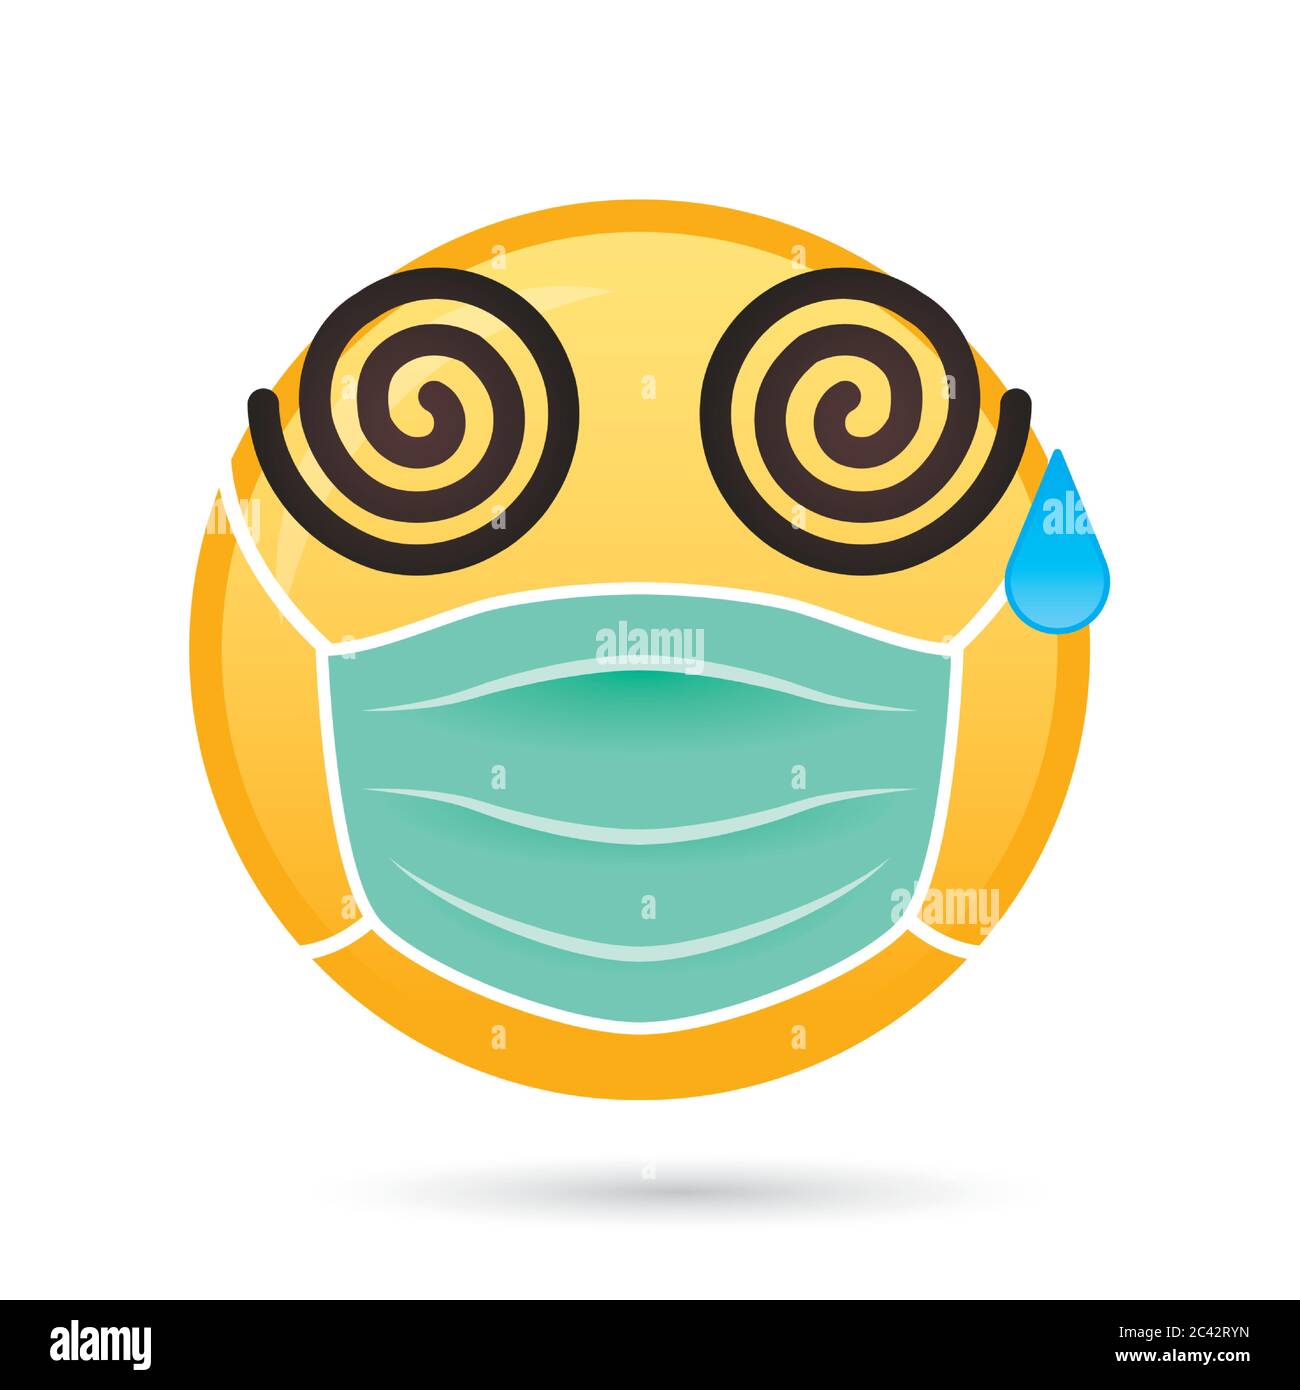 emoji face medical mask funny character vector illustration design Stock Vector